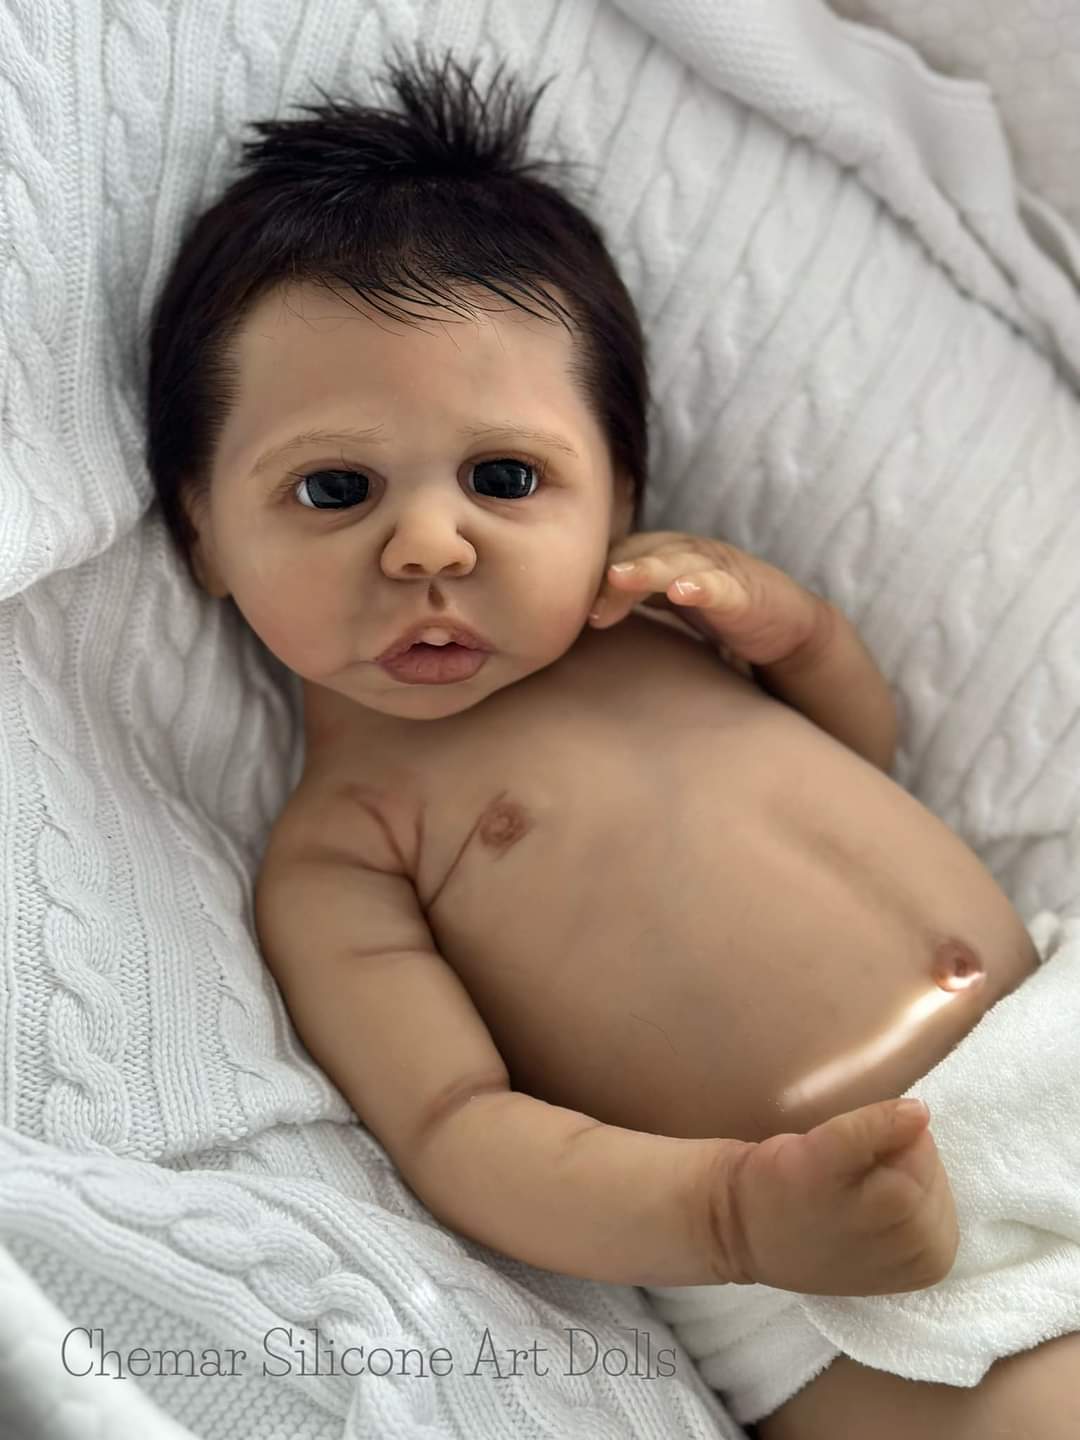 Ashton Full Body Silicone Baby by Jade Warner - Deposit Only – A Wee Bit Of  Heaven Reborn Nursery